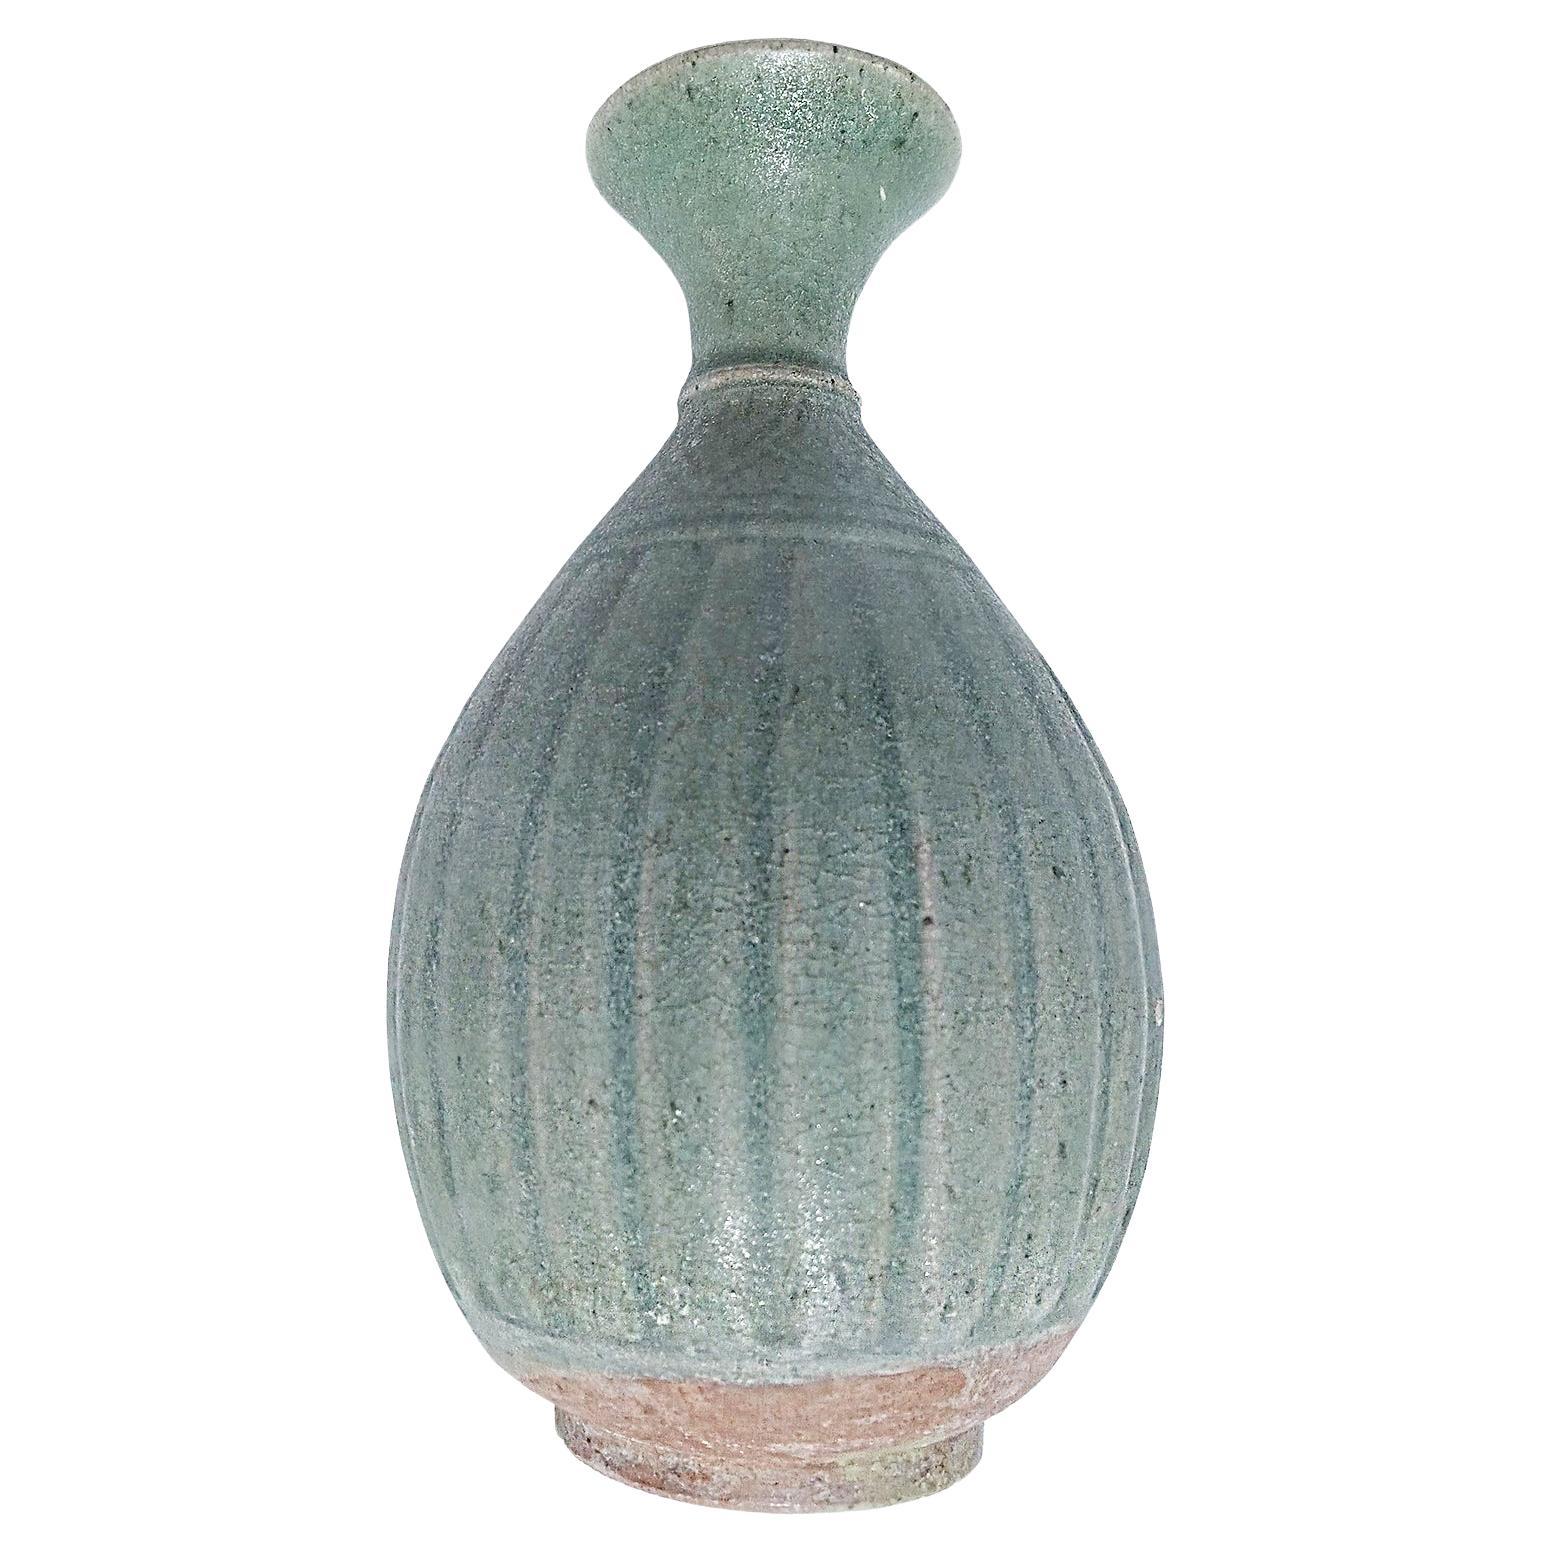 Thai Celadon Vase, Late 19th Century